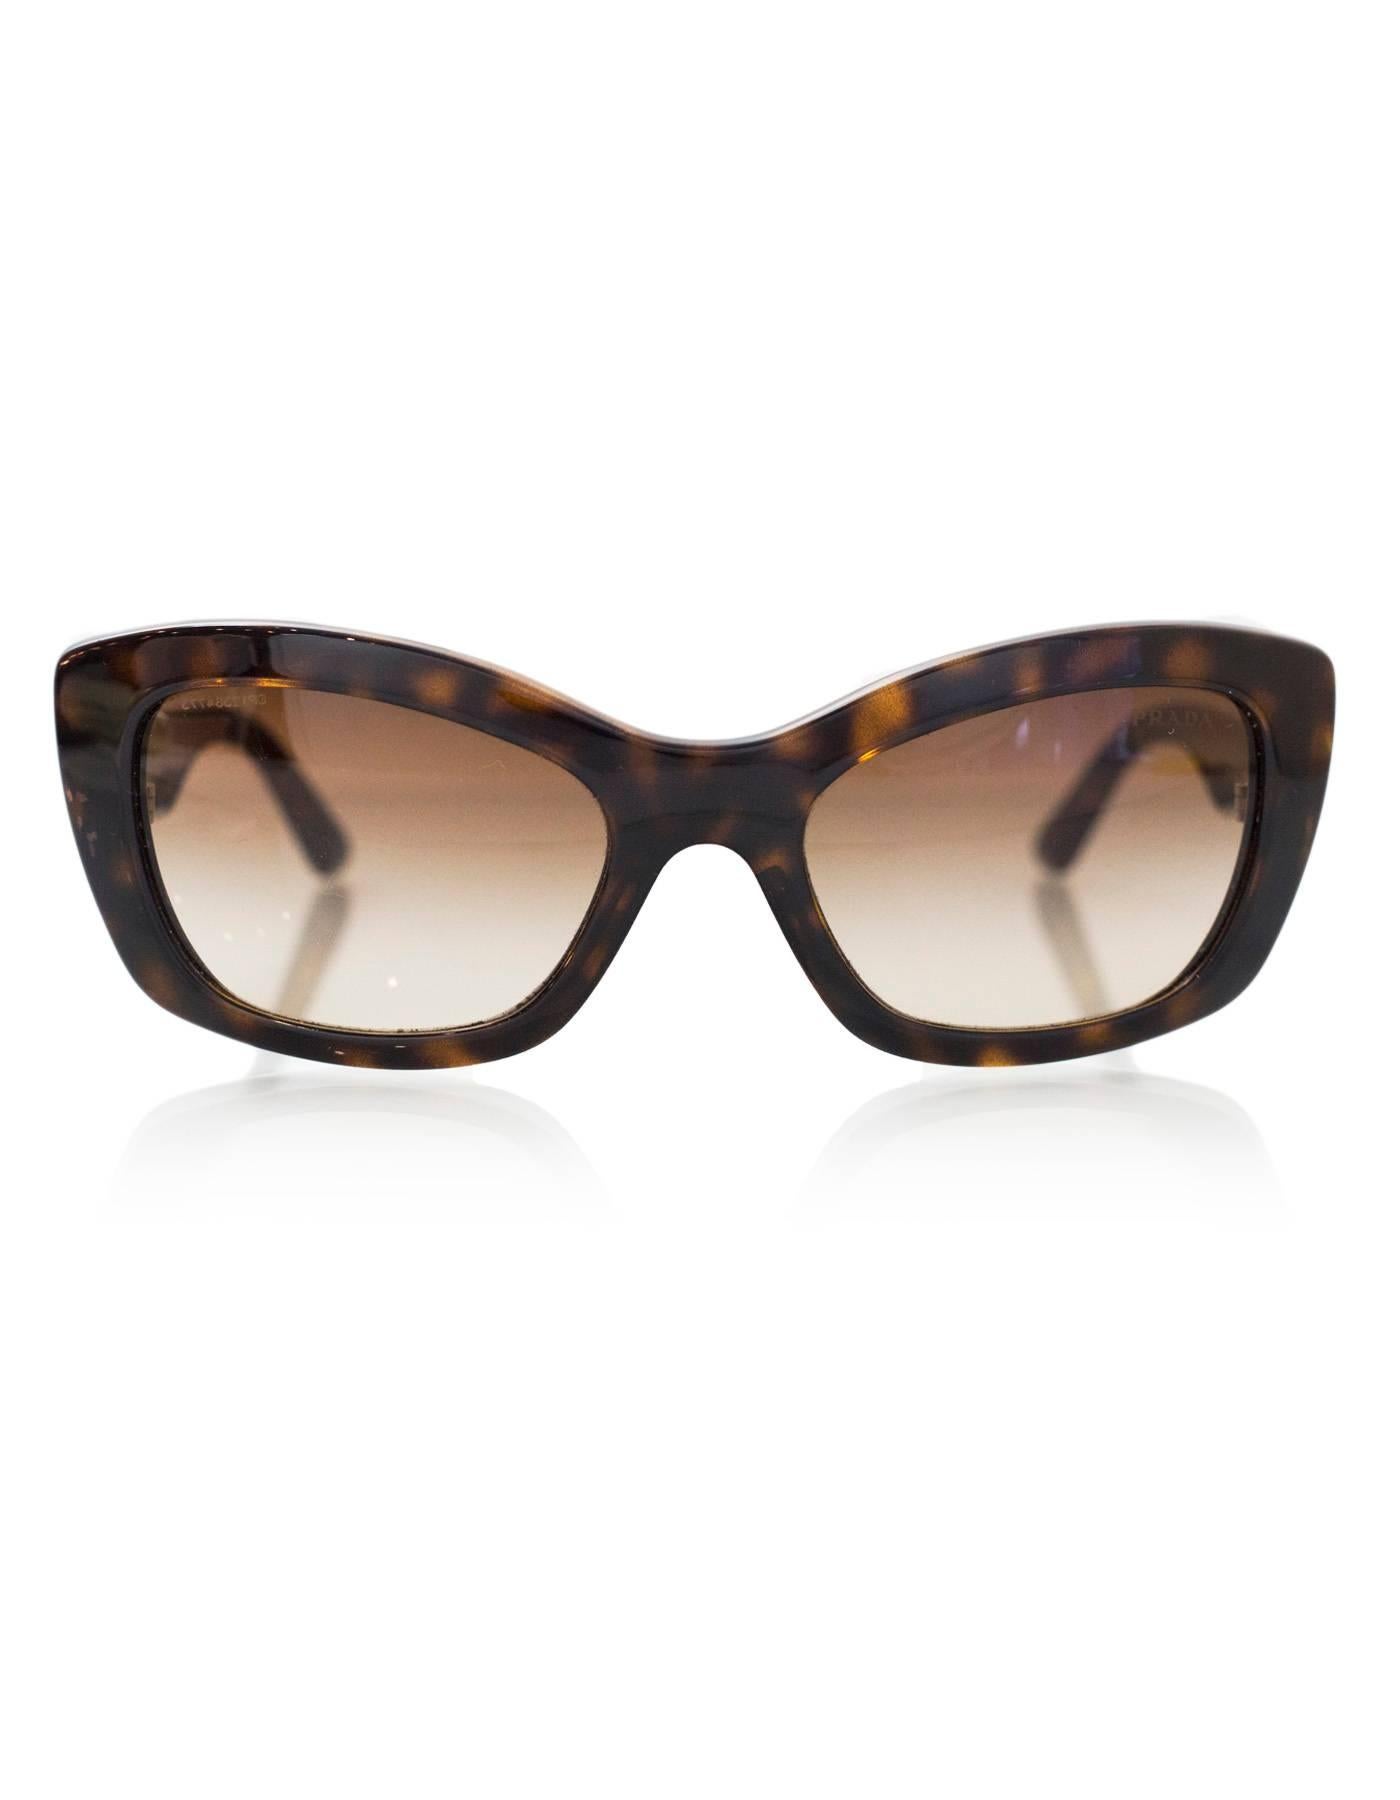 Black Prada Brown Tortoise Sunglasses with Case